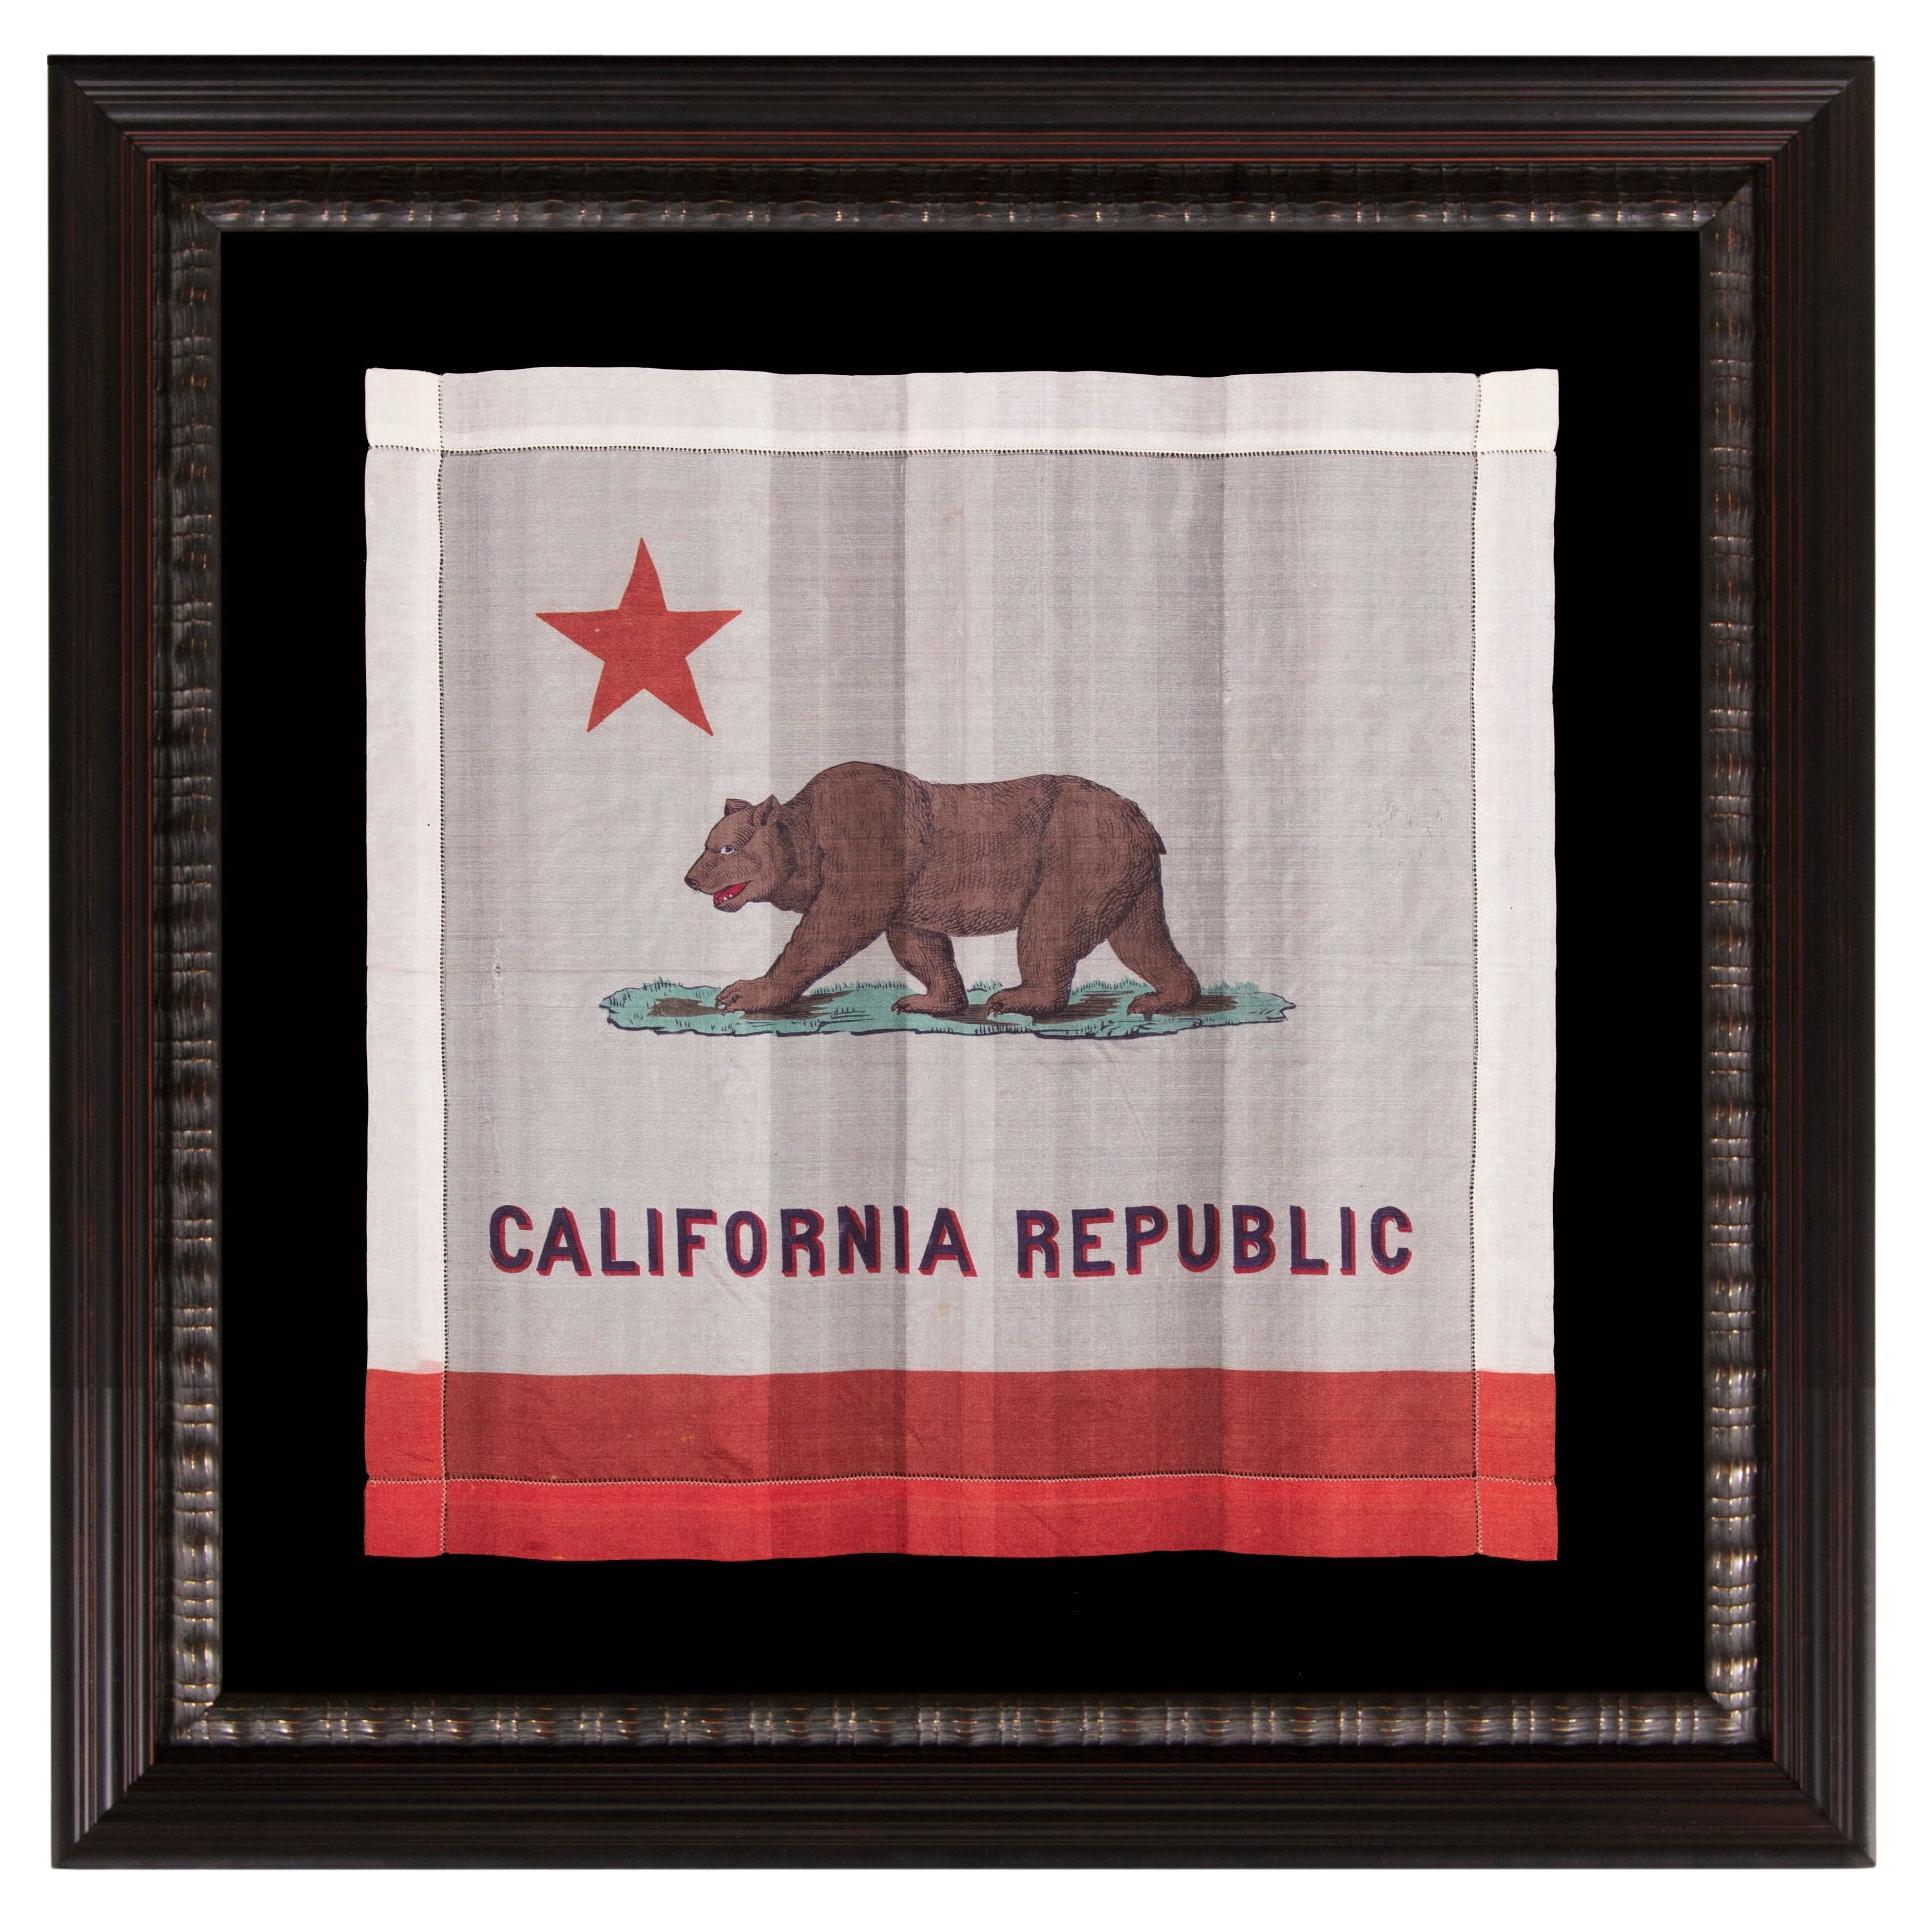 Early California Republic Kerchief, Likely Made at the Panama-Pacific Expo 1915